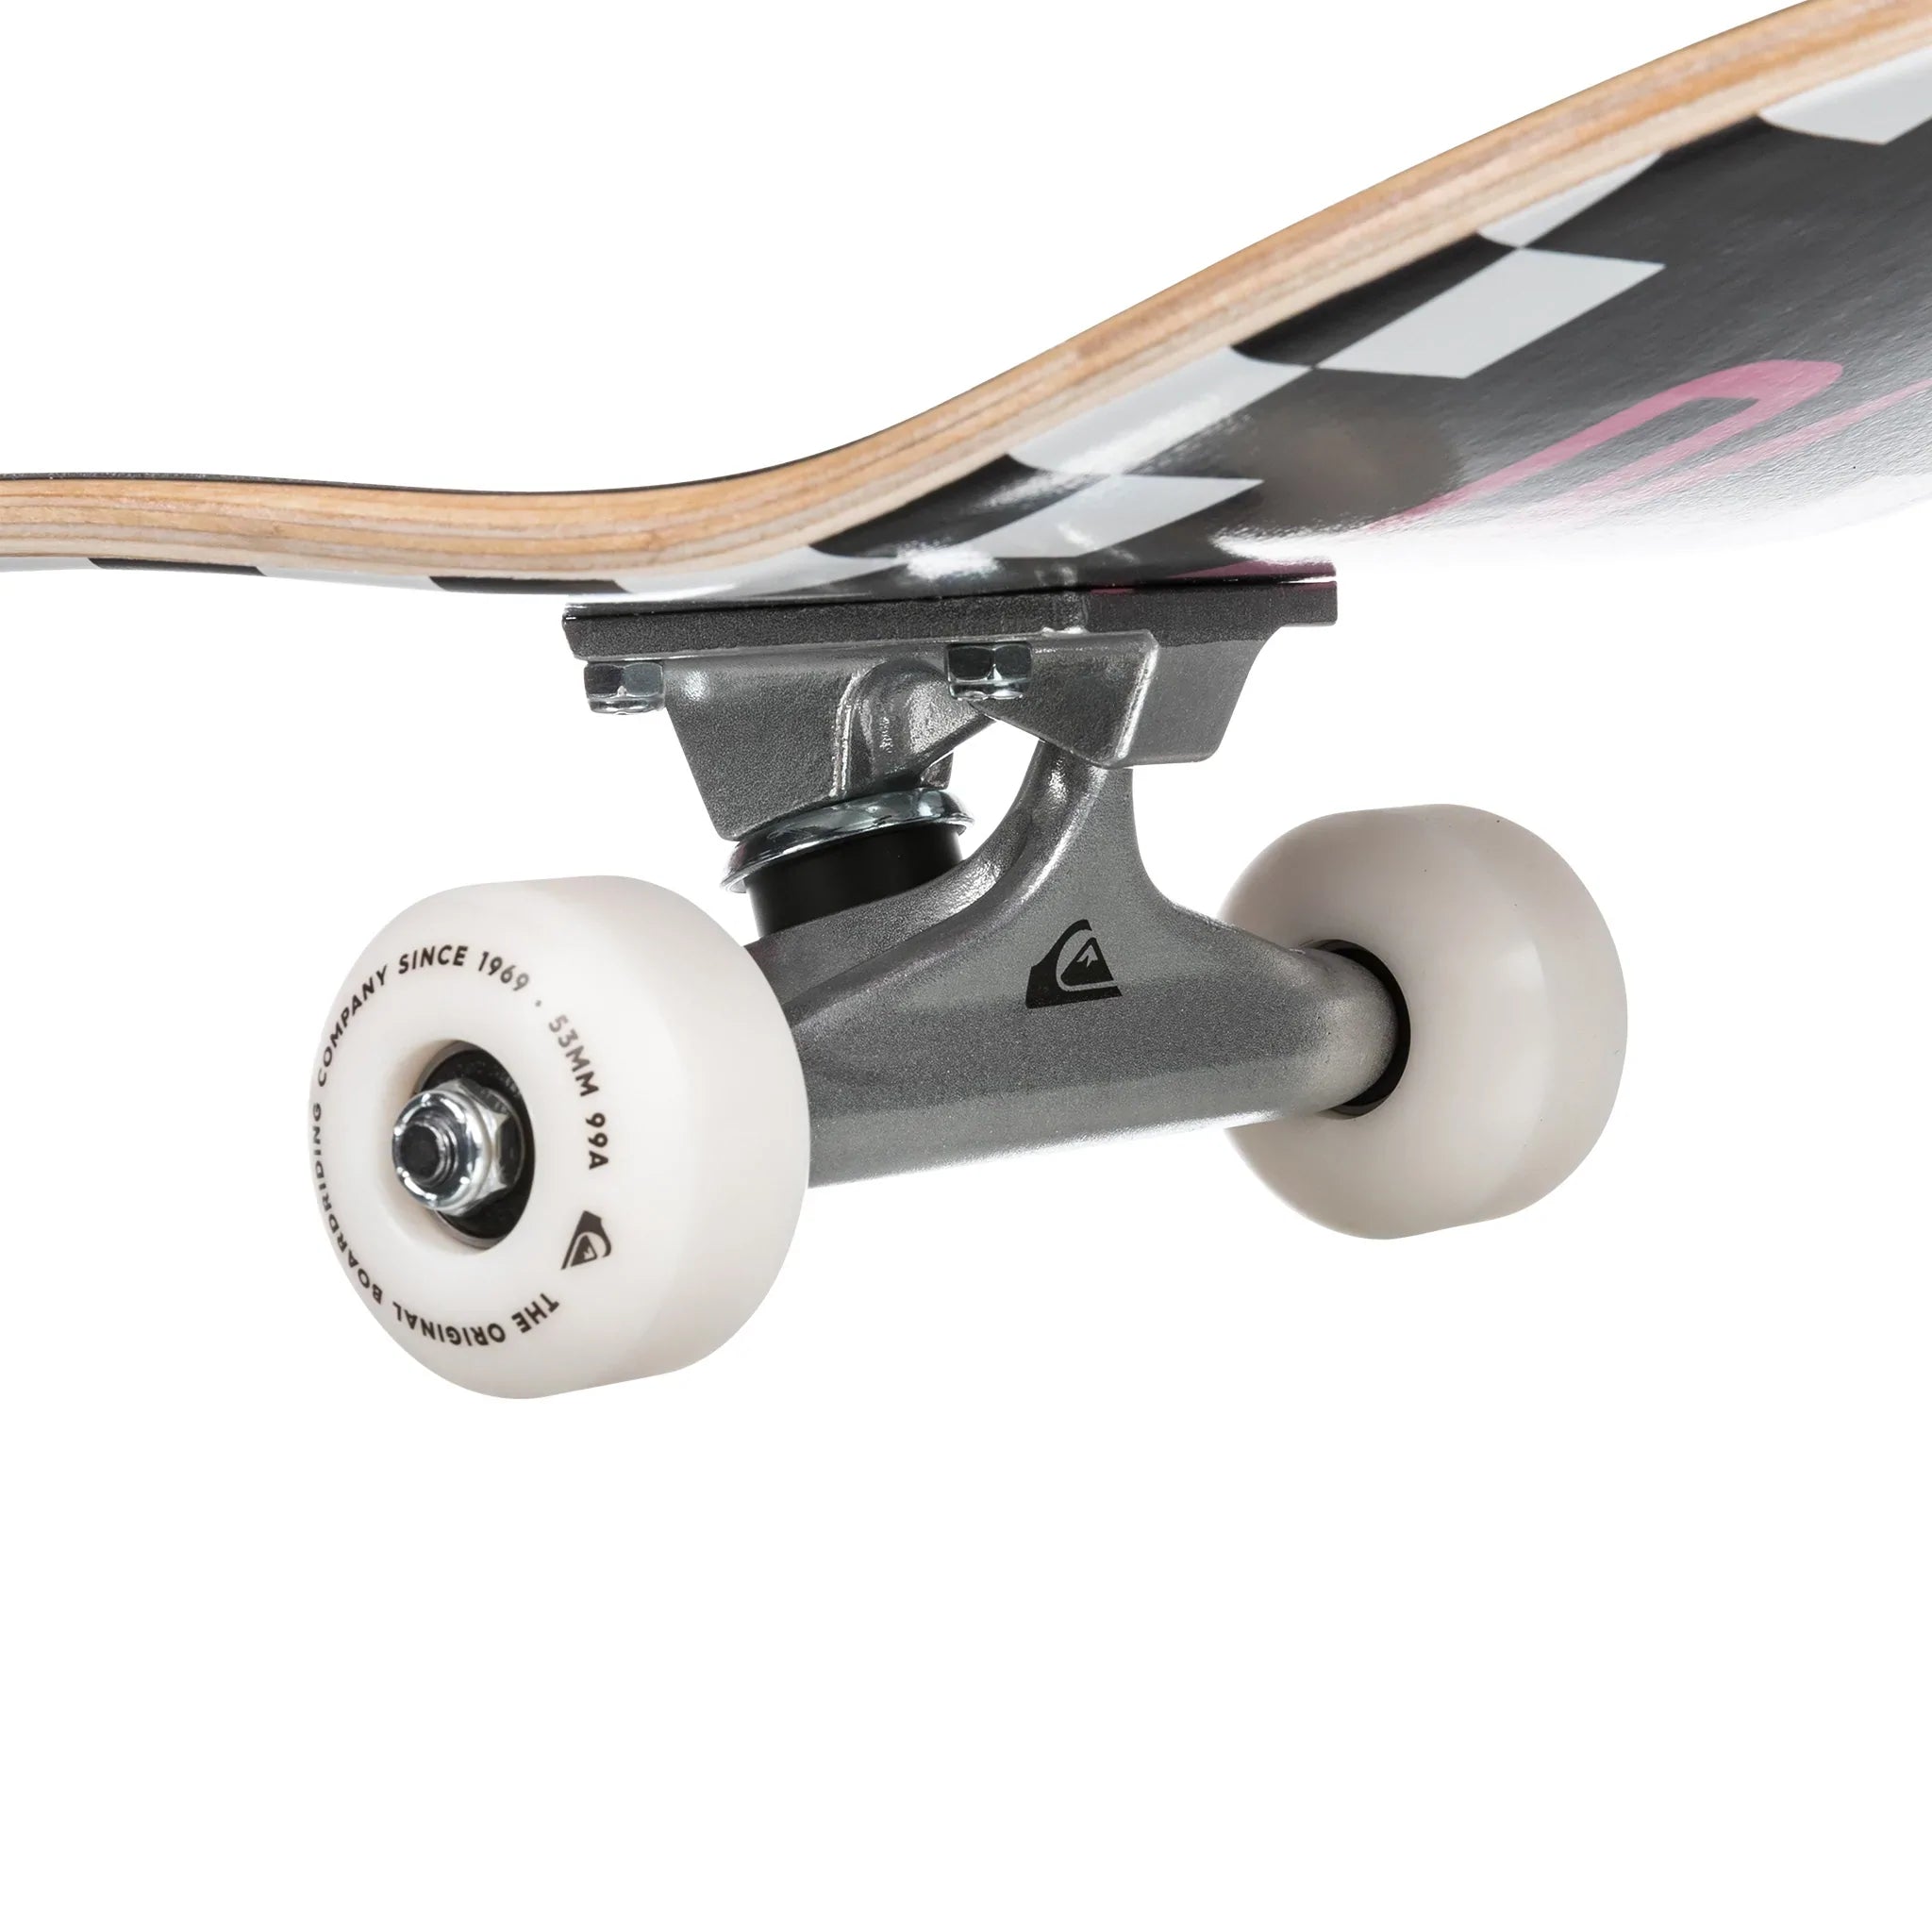 Quiksilver Shred Skateboard - Black 8"